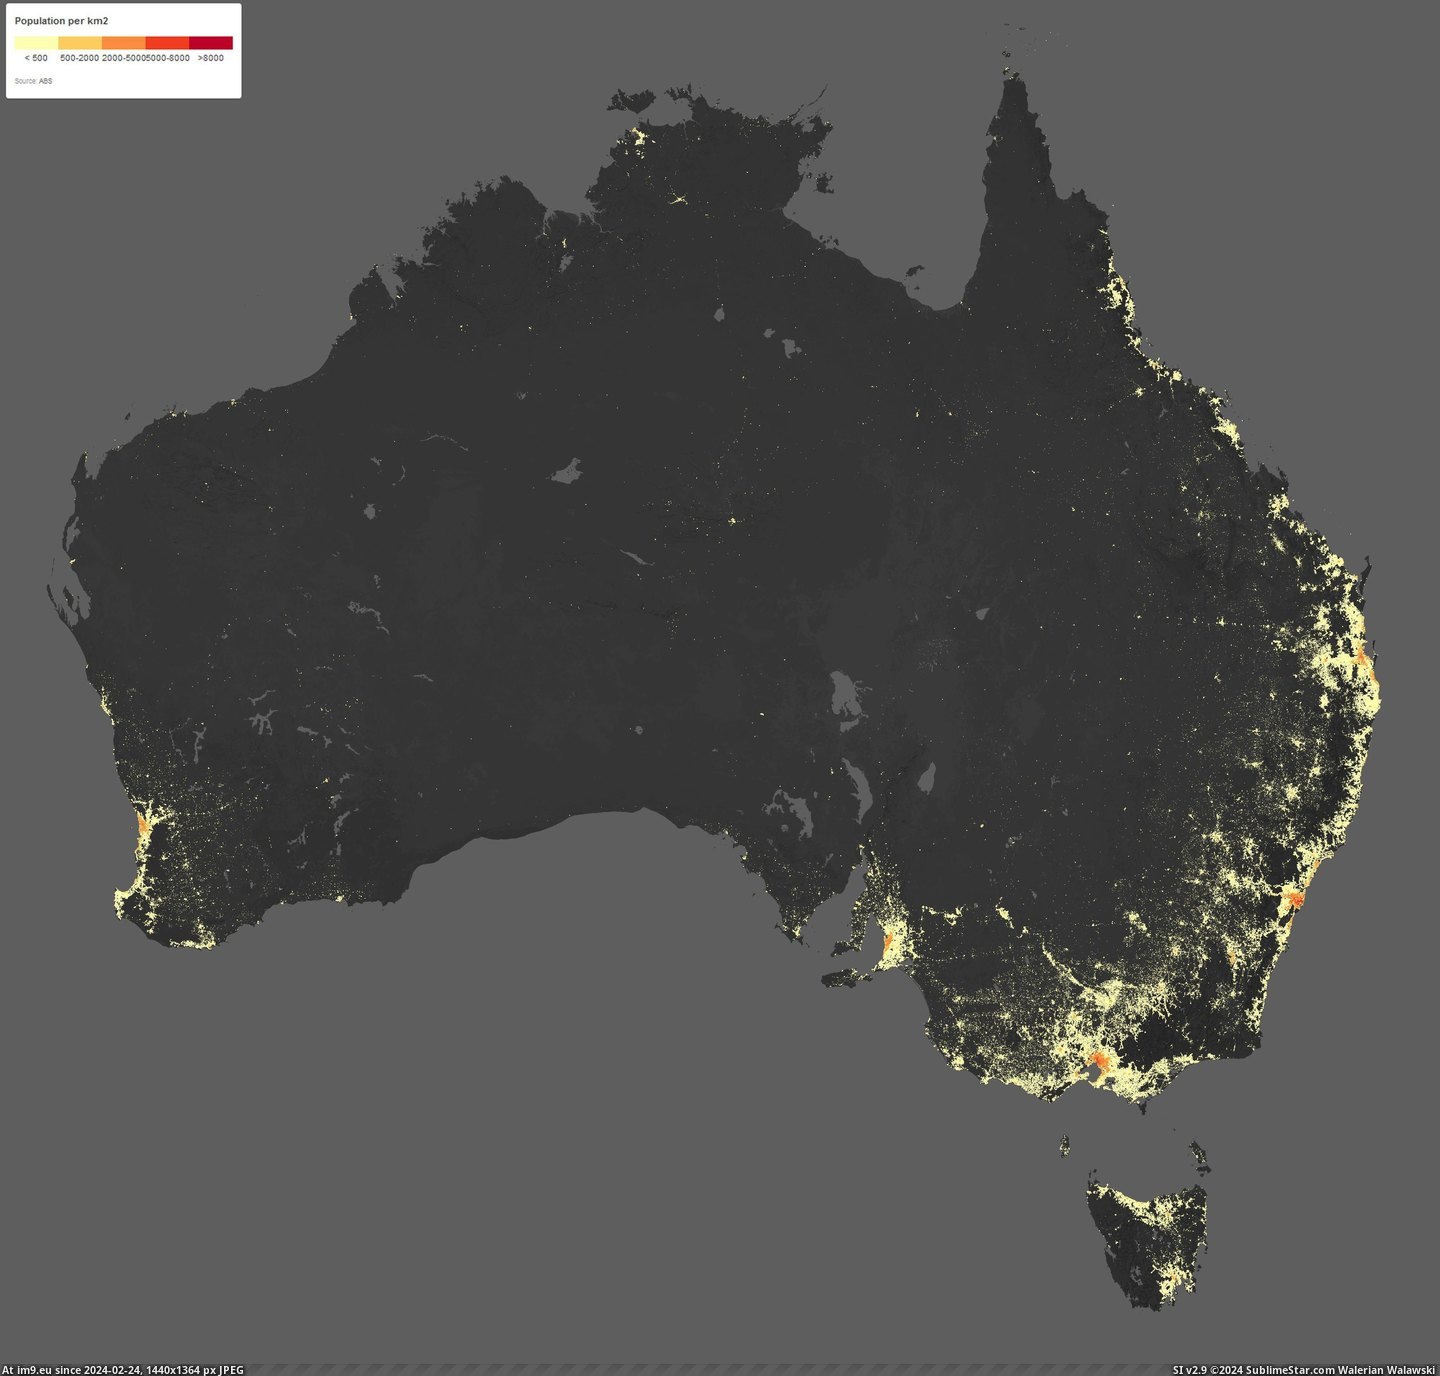 #Population #Density #Australia [Mapporn] Australia's Population Density [4000x3800] Pic. (Bild von album My r/MAPS favs))